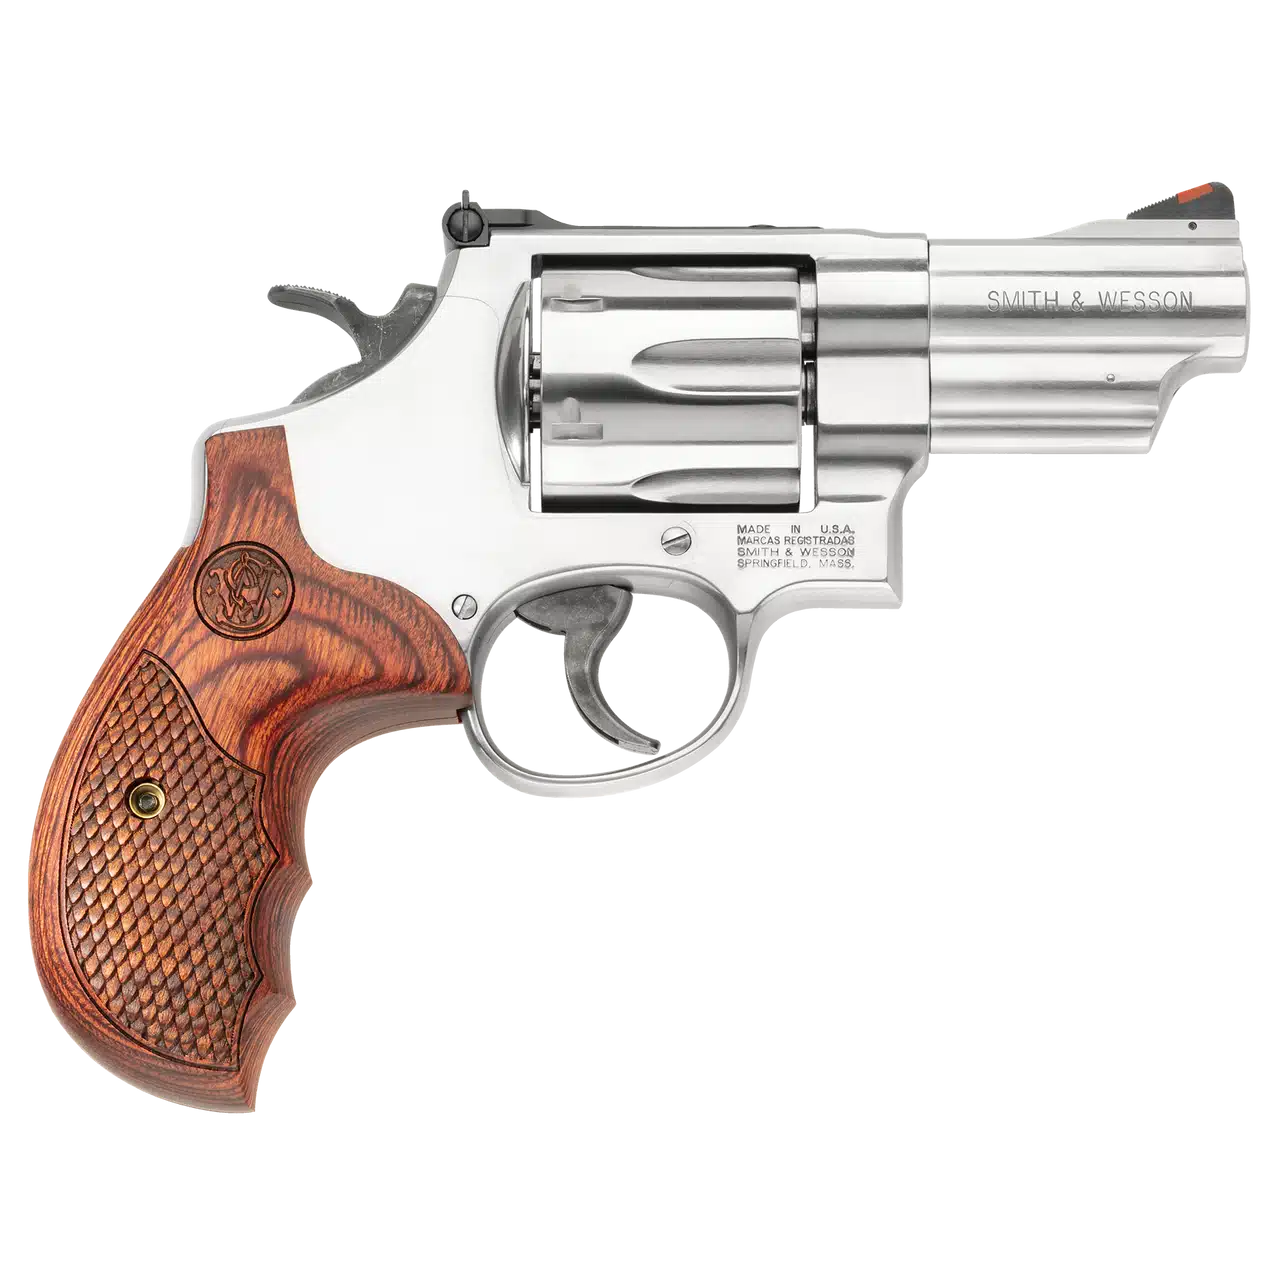 Buy Smith & Wesson Model 629 Deluxe 3 Barrel Revolver Online